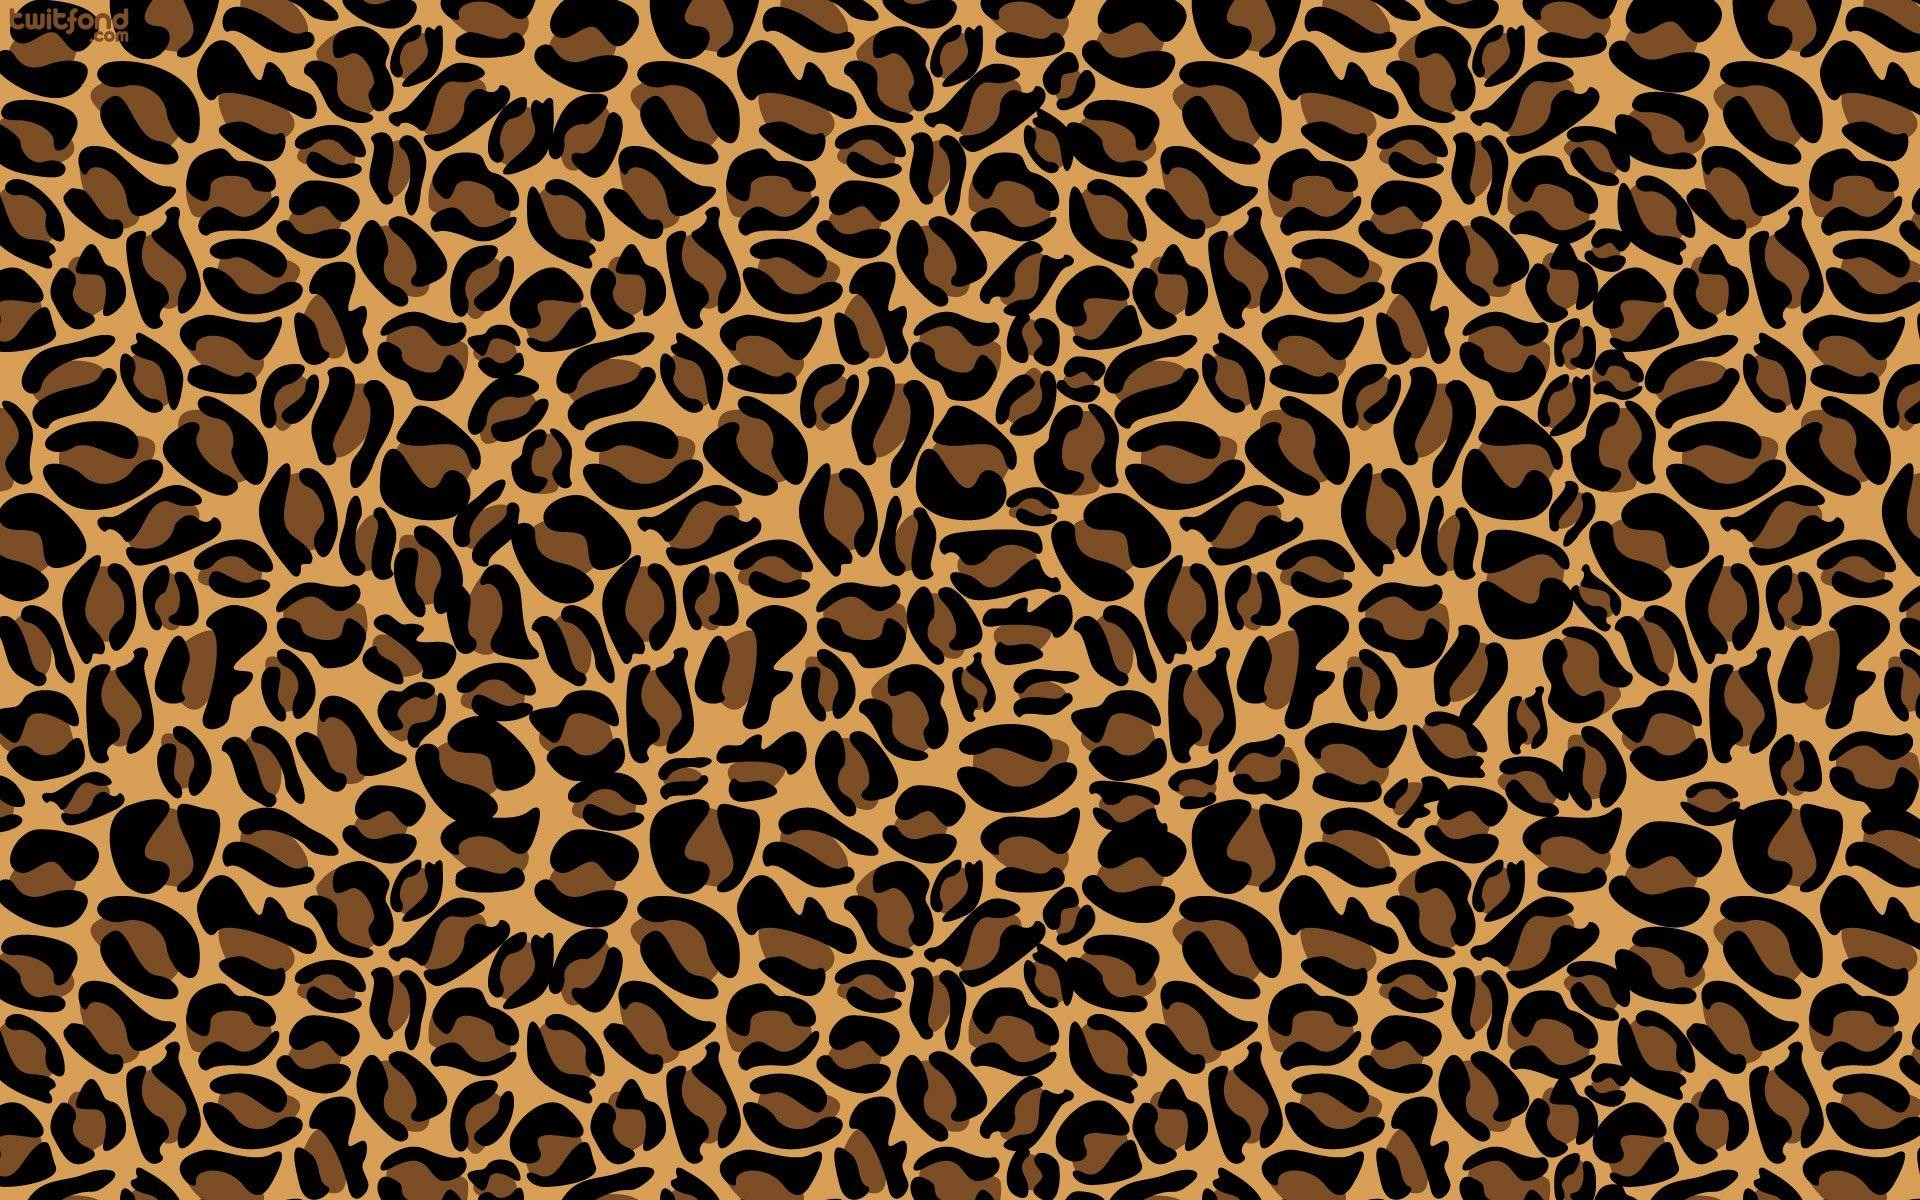 Cheetah Backgrounds.